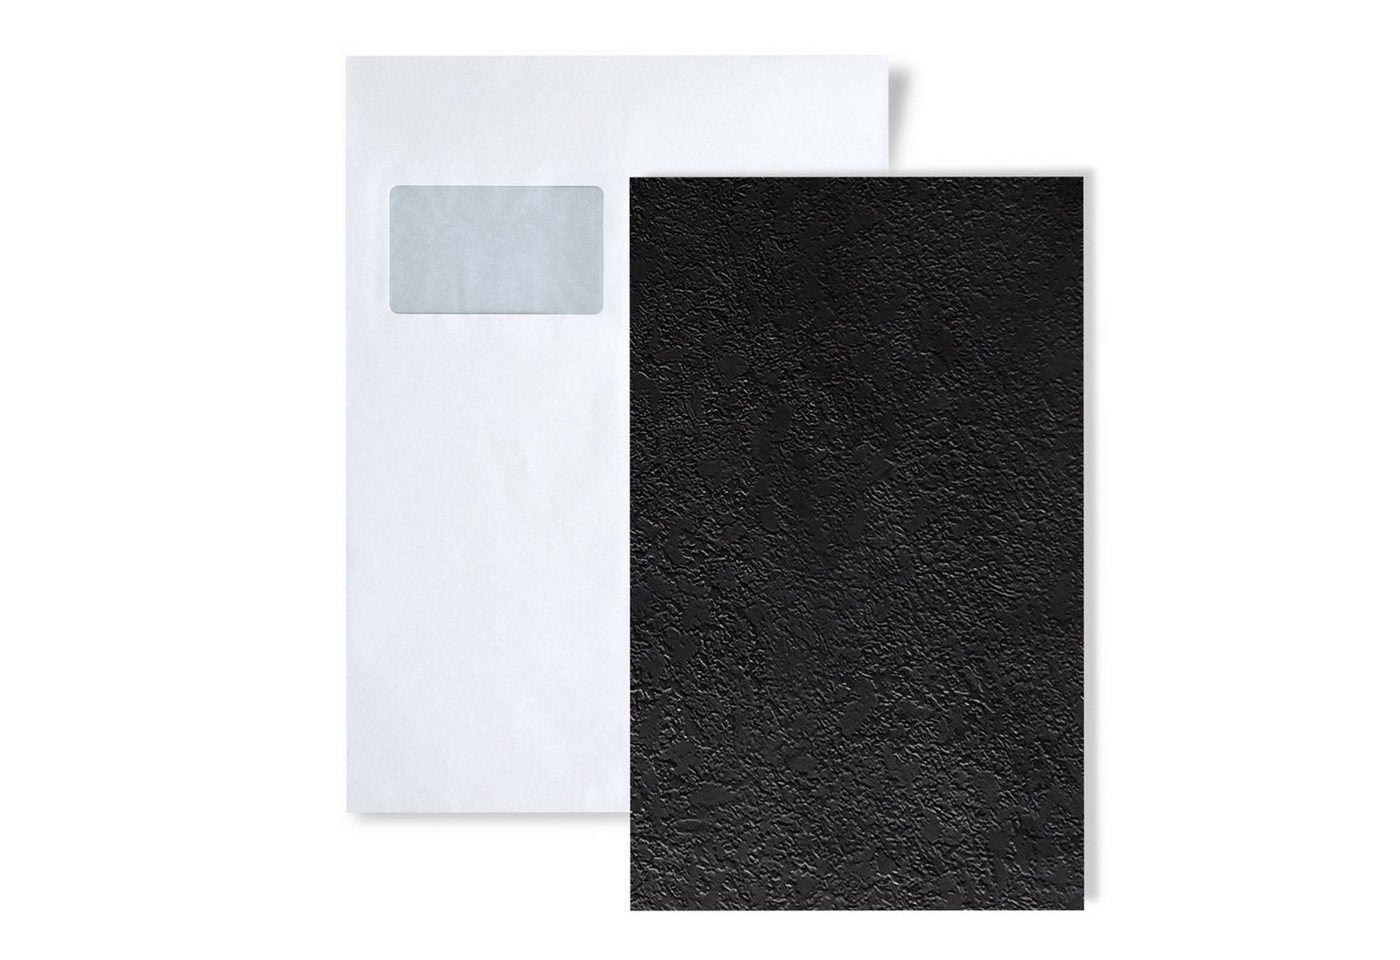 Wallface Dekorpaneele S-22737-NA, BxL: 15x20 cm, (1 MUSTERSTÜCK, Produktmuster, 1-tlg., Muster des Dekorpaneels) schwarz von Wallface